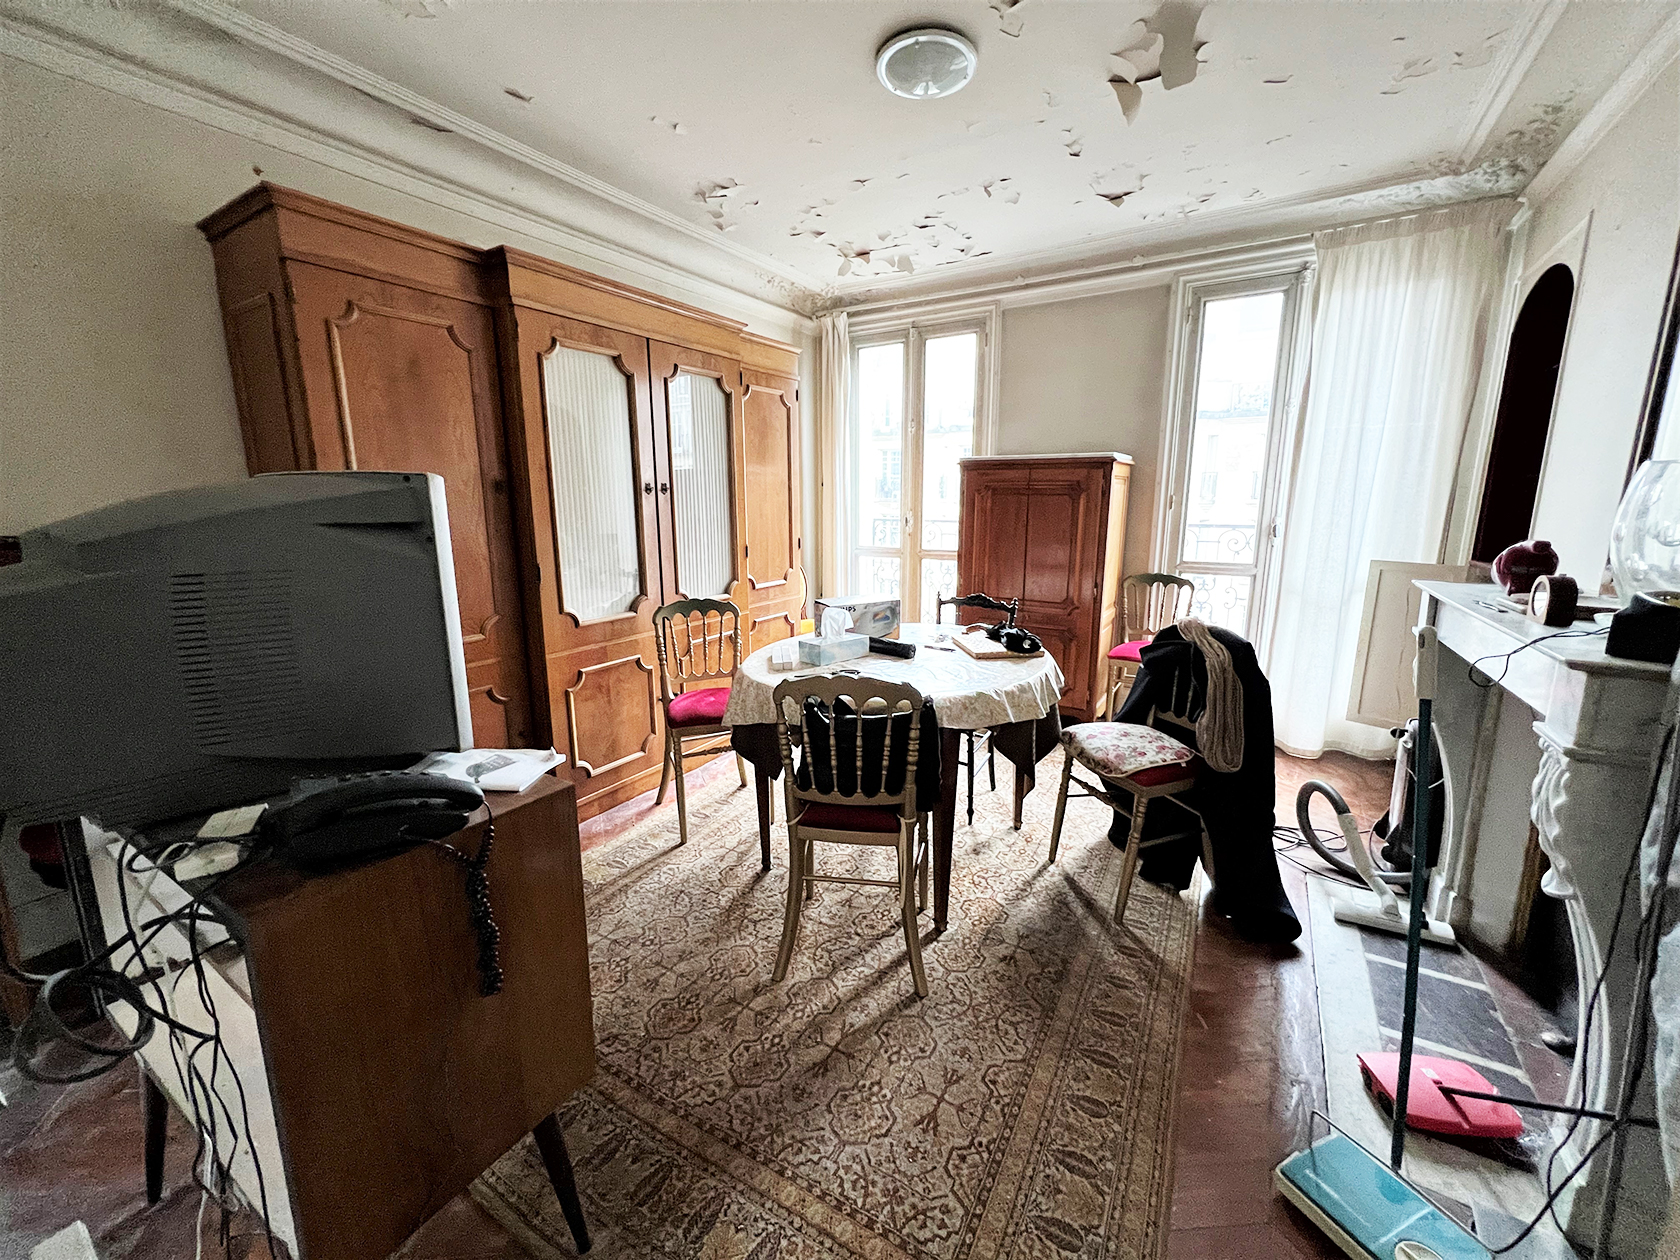 remodeling apartment in paris